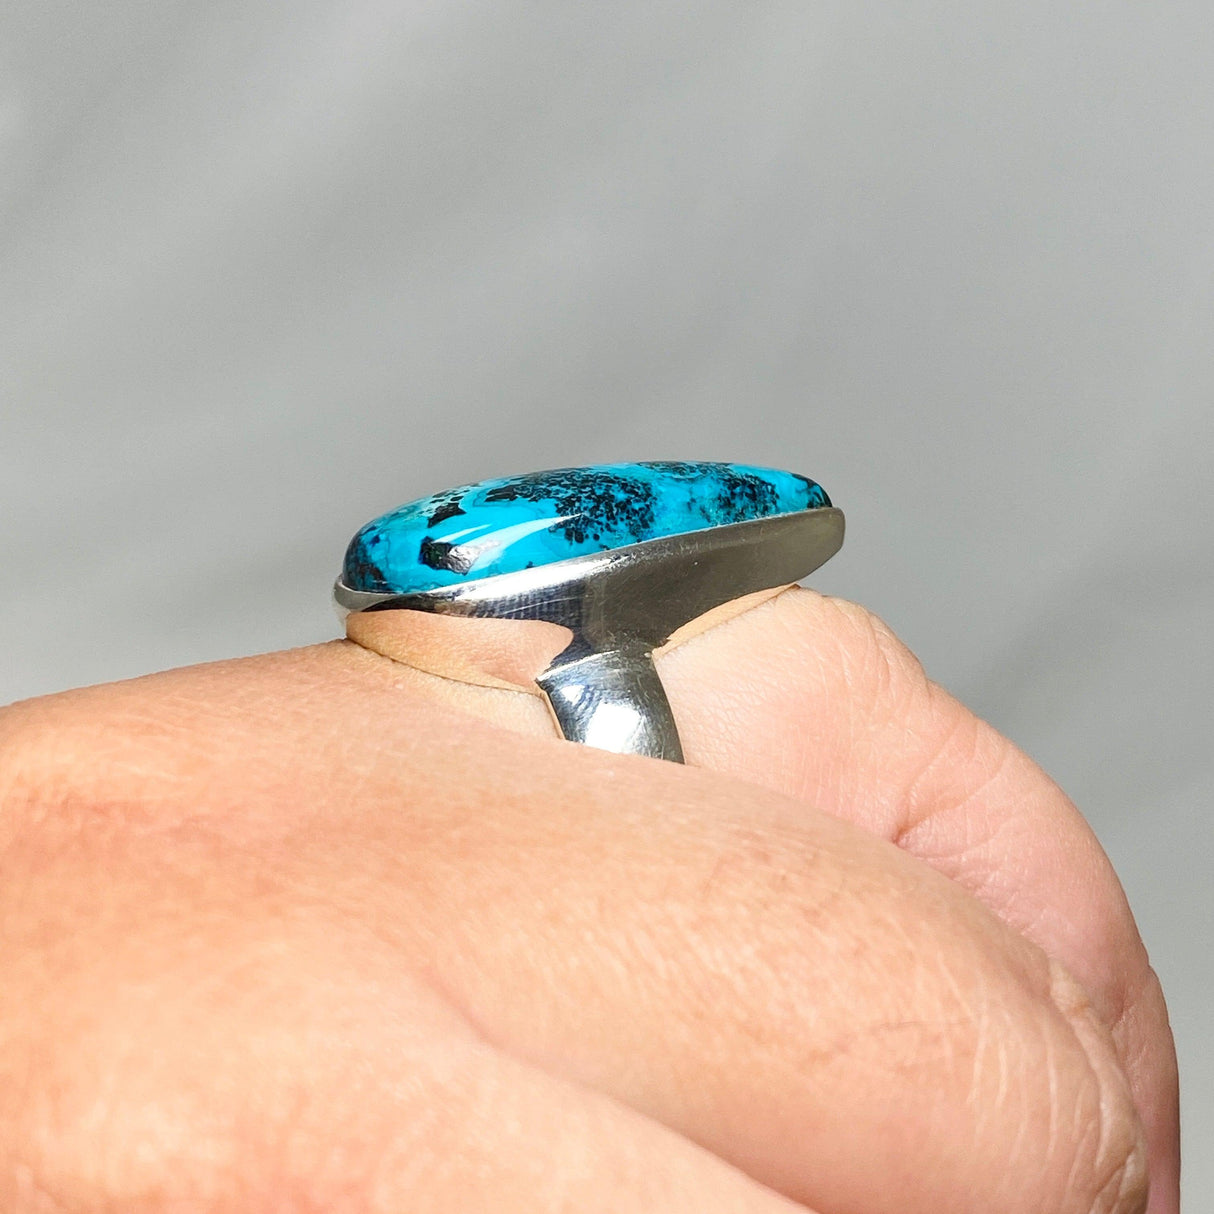 Shattuckite Teardrop Ring Size 11 PRGJ436 - Nature's Magick